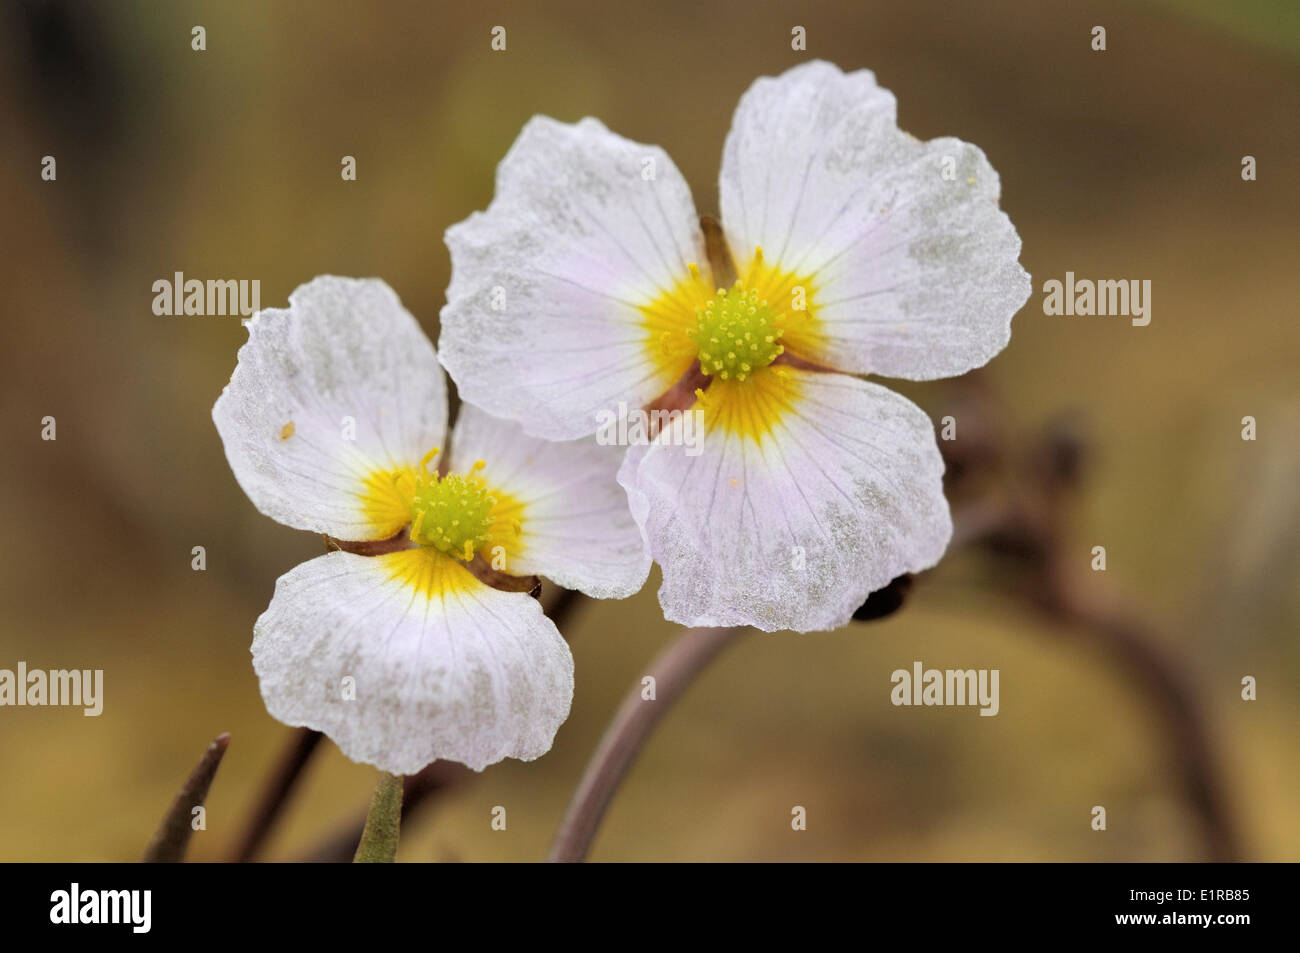 Two white flowers of Echinodorus ranunculoides next to eachother Stock Photo